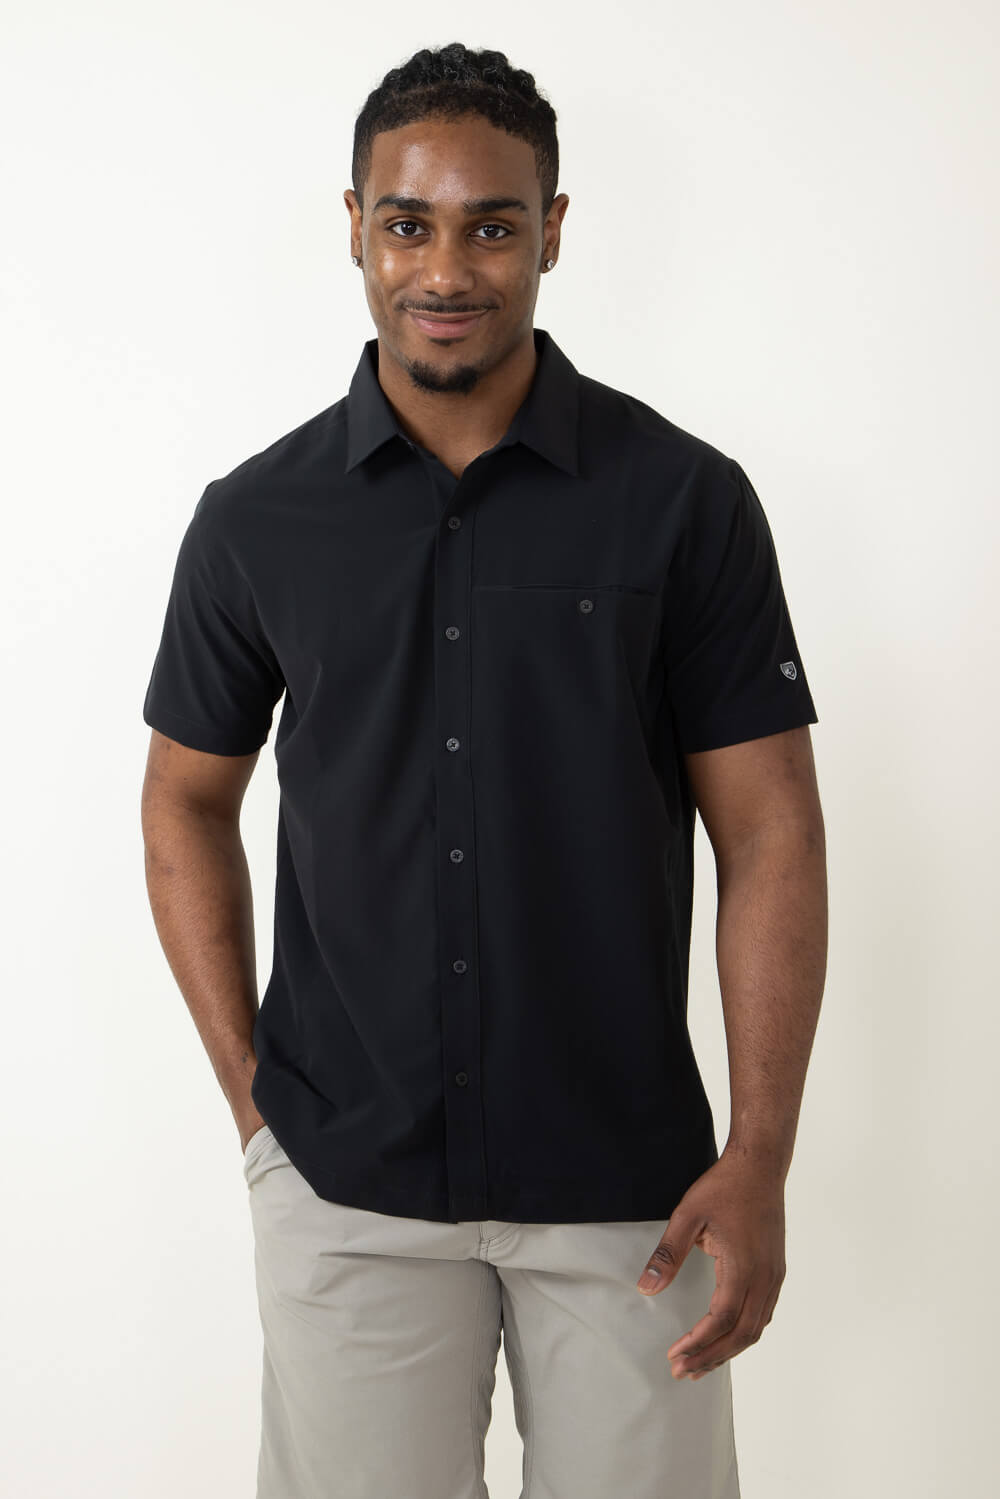 Kuhl Renegade Shirt for Men in Black